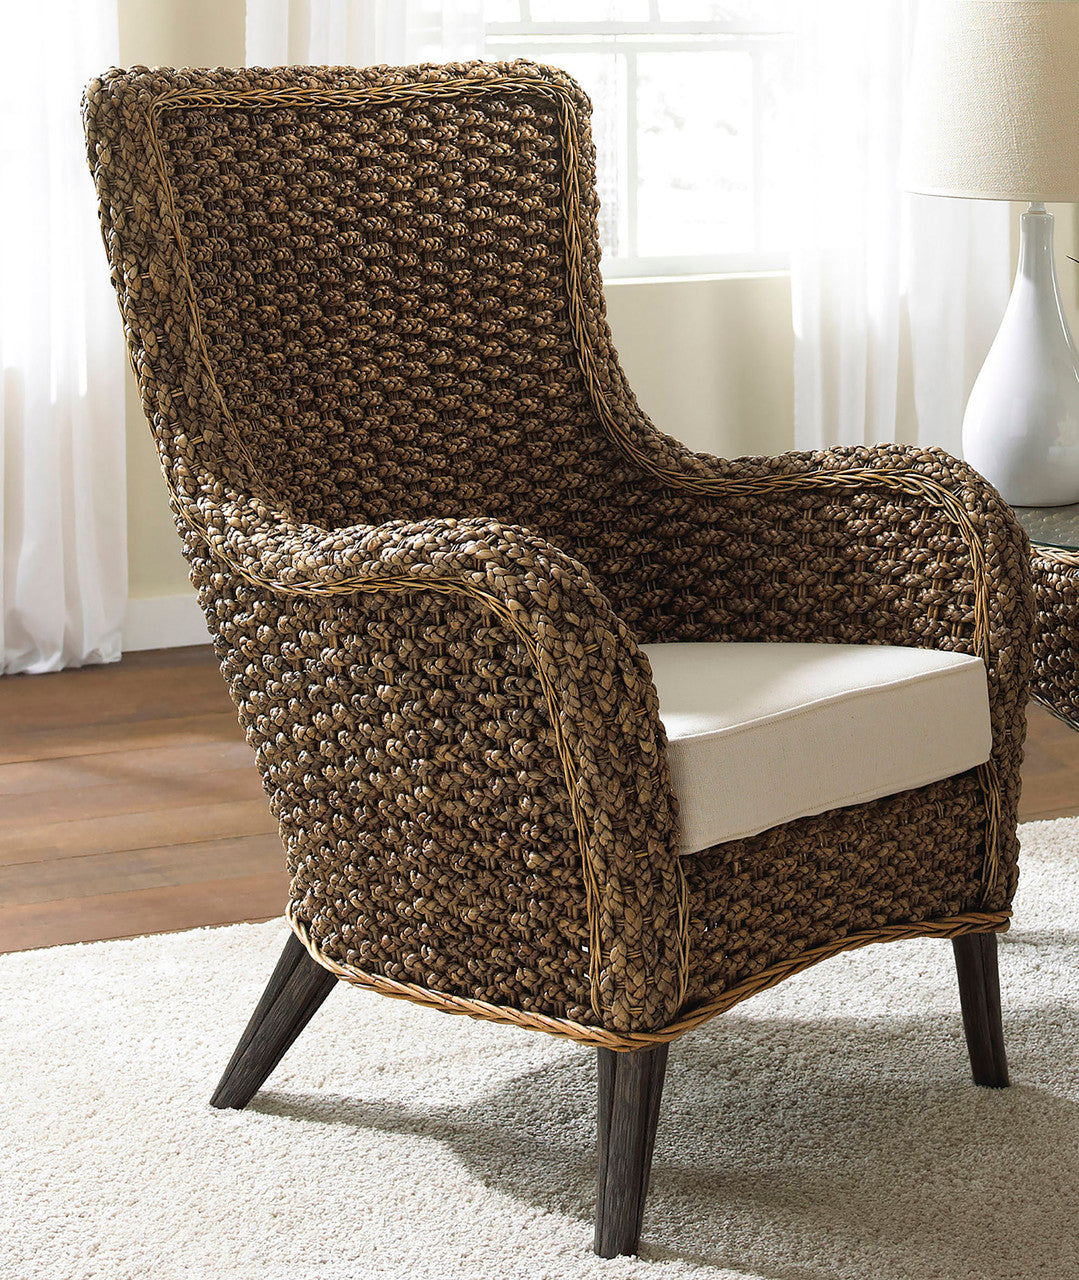 Panama Jack Sanibel Lounge Chair with Cushion